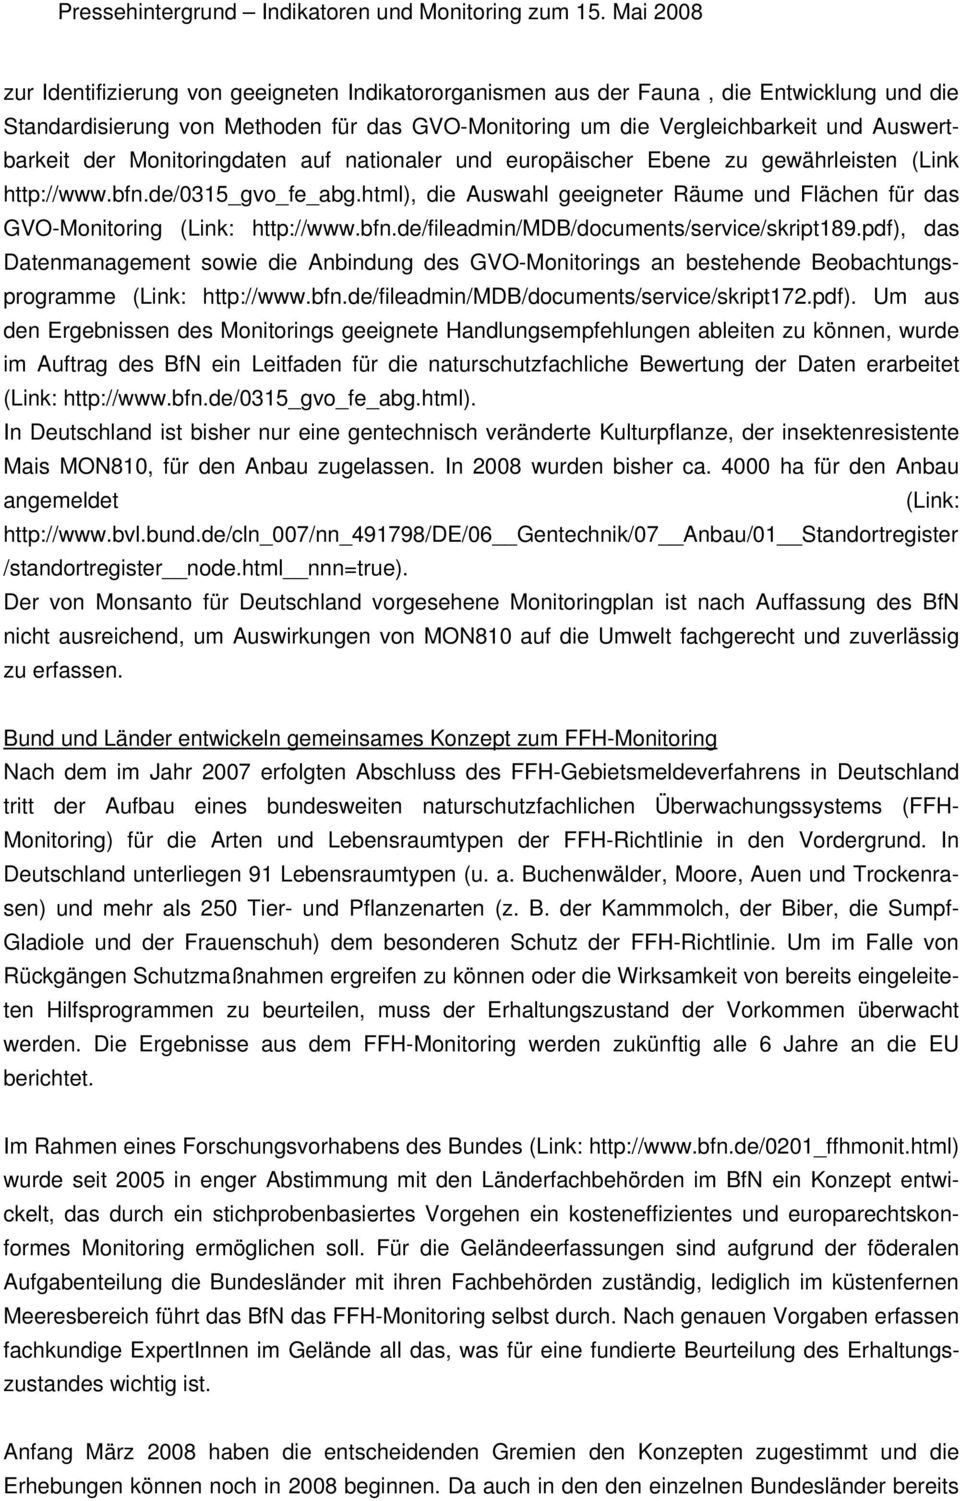 bfn.de/fileadmin/mdb/documents/service/skript189.pdf), das Datenmanagement sowie die Anbindung des GVO-Monitorings an bestehende Beobachtungsprogramme (Link: http://www.bfn.de/fileadmin/mdb/documents/service/skript172.